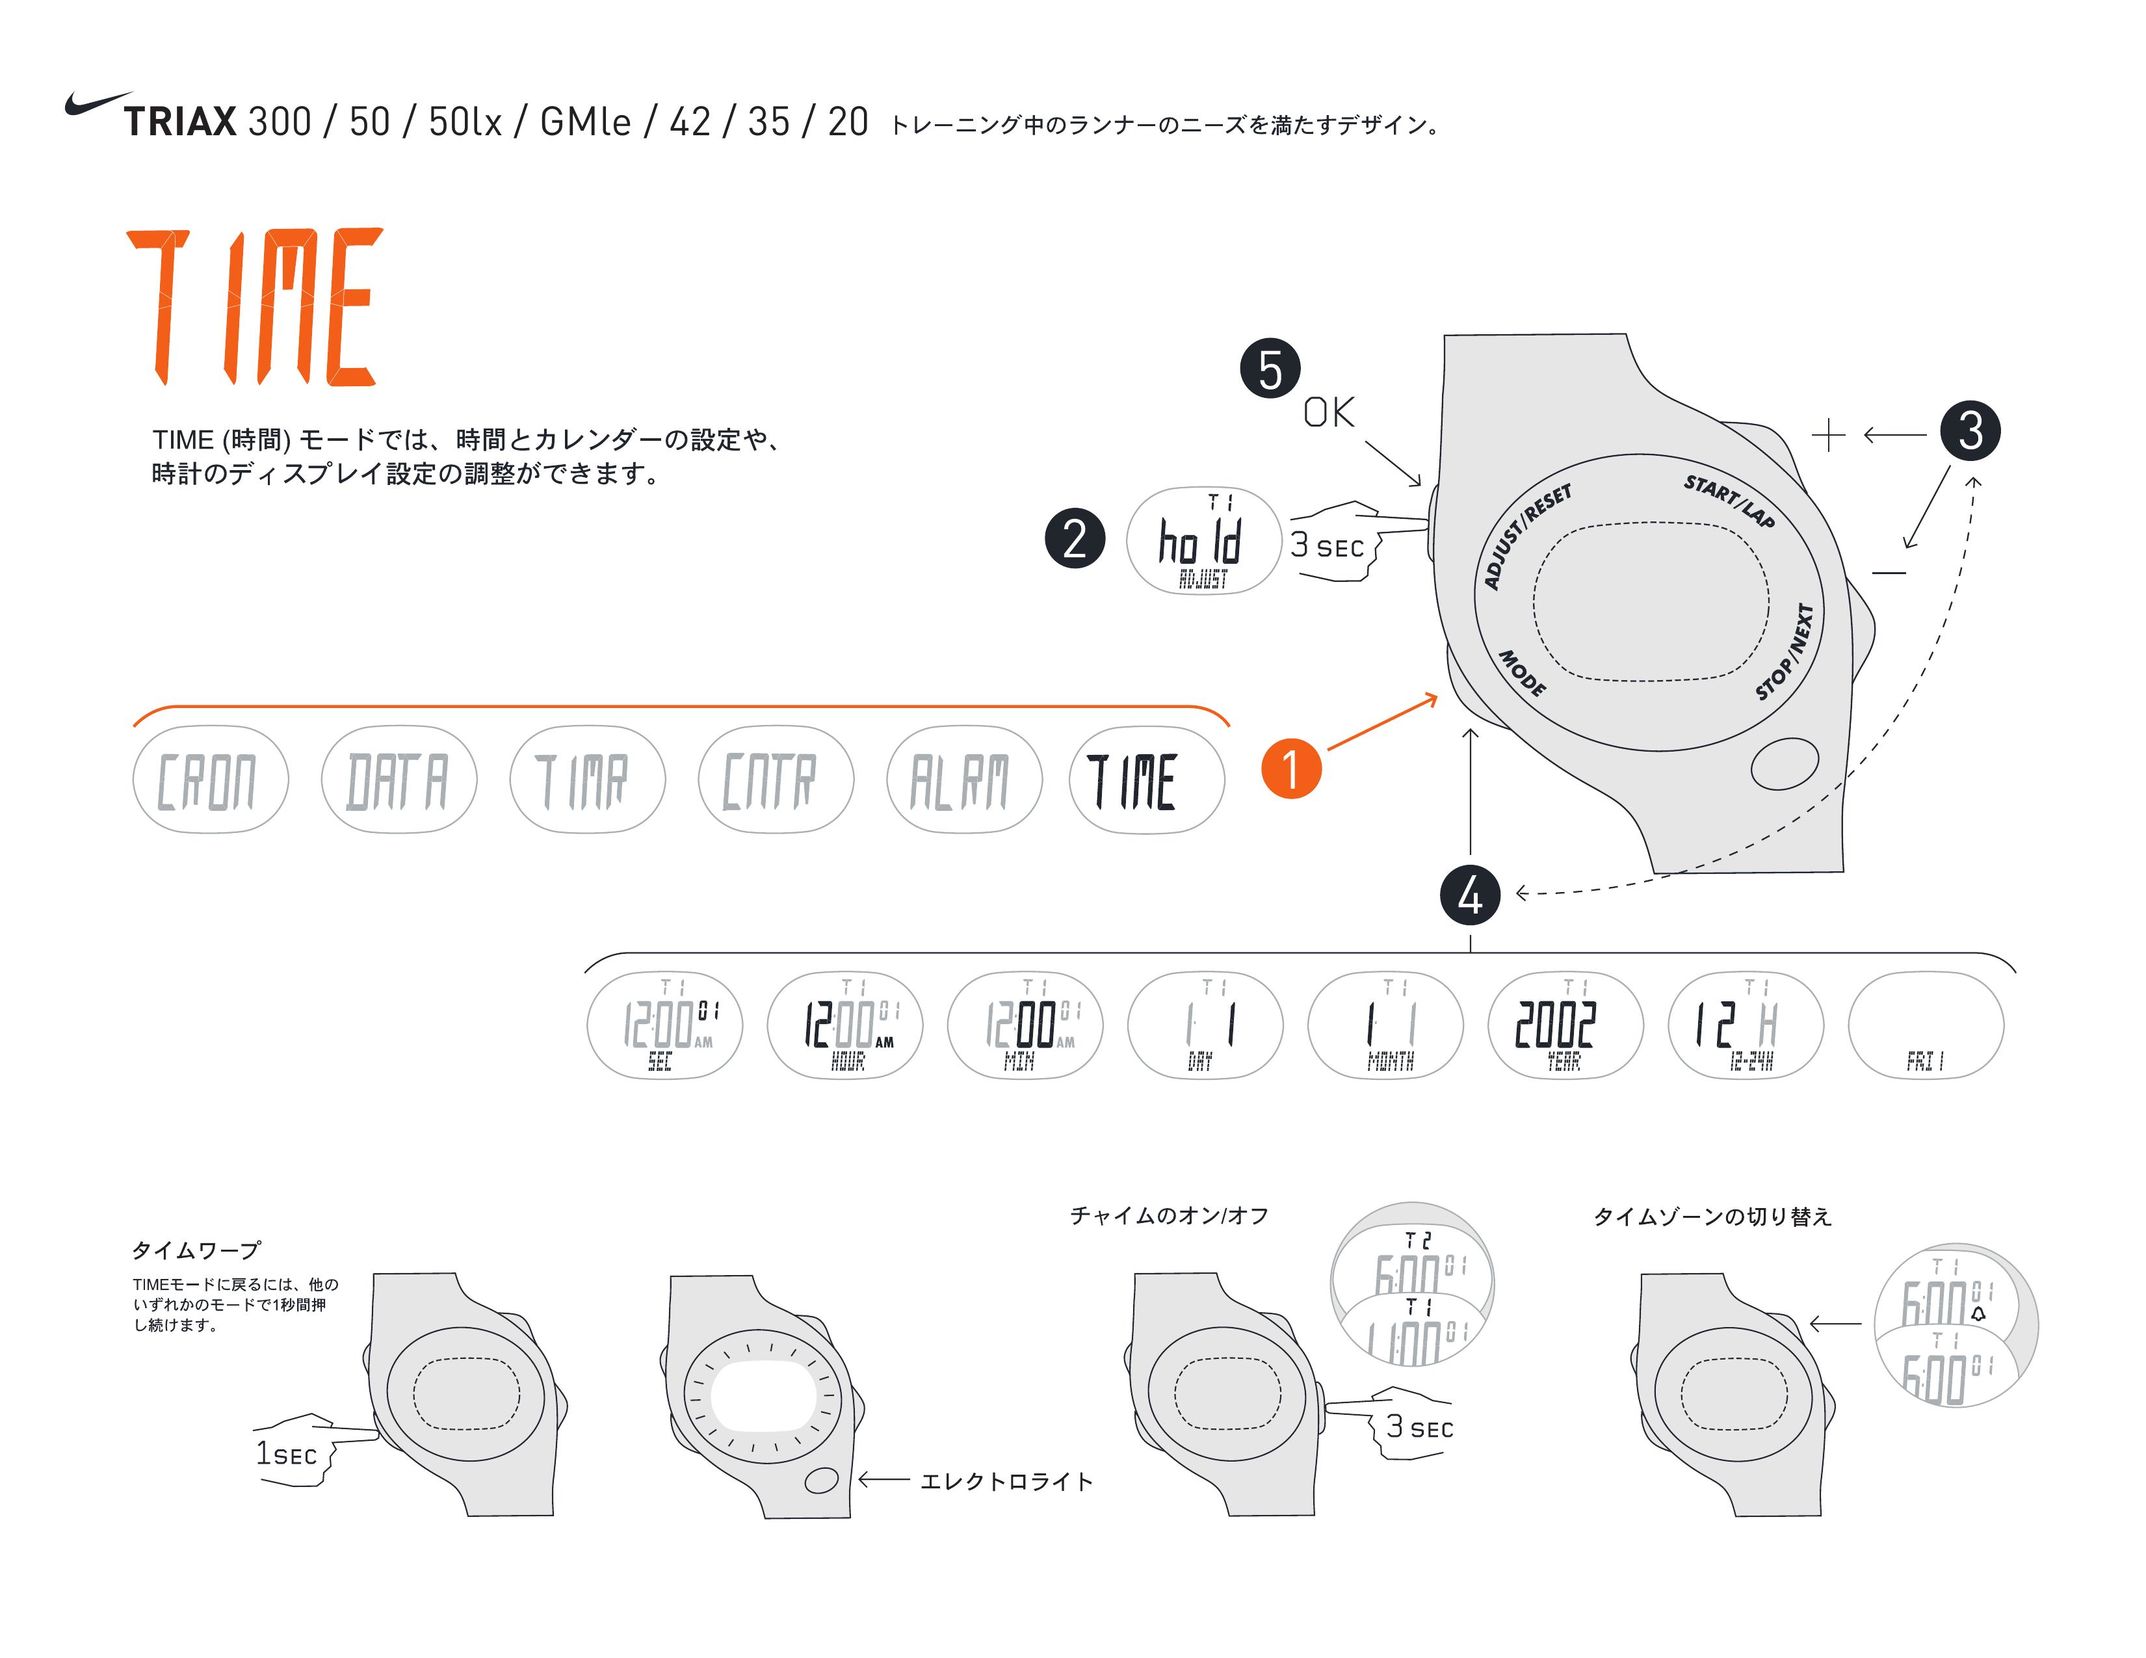 Nike 50lx Watch User Manual